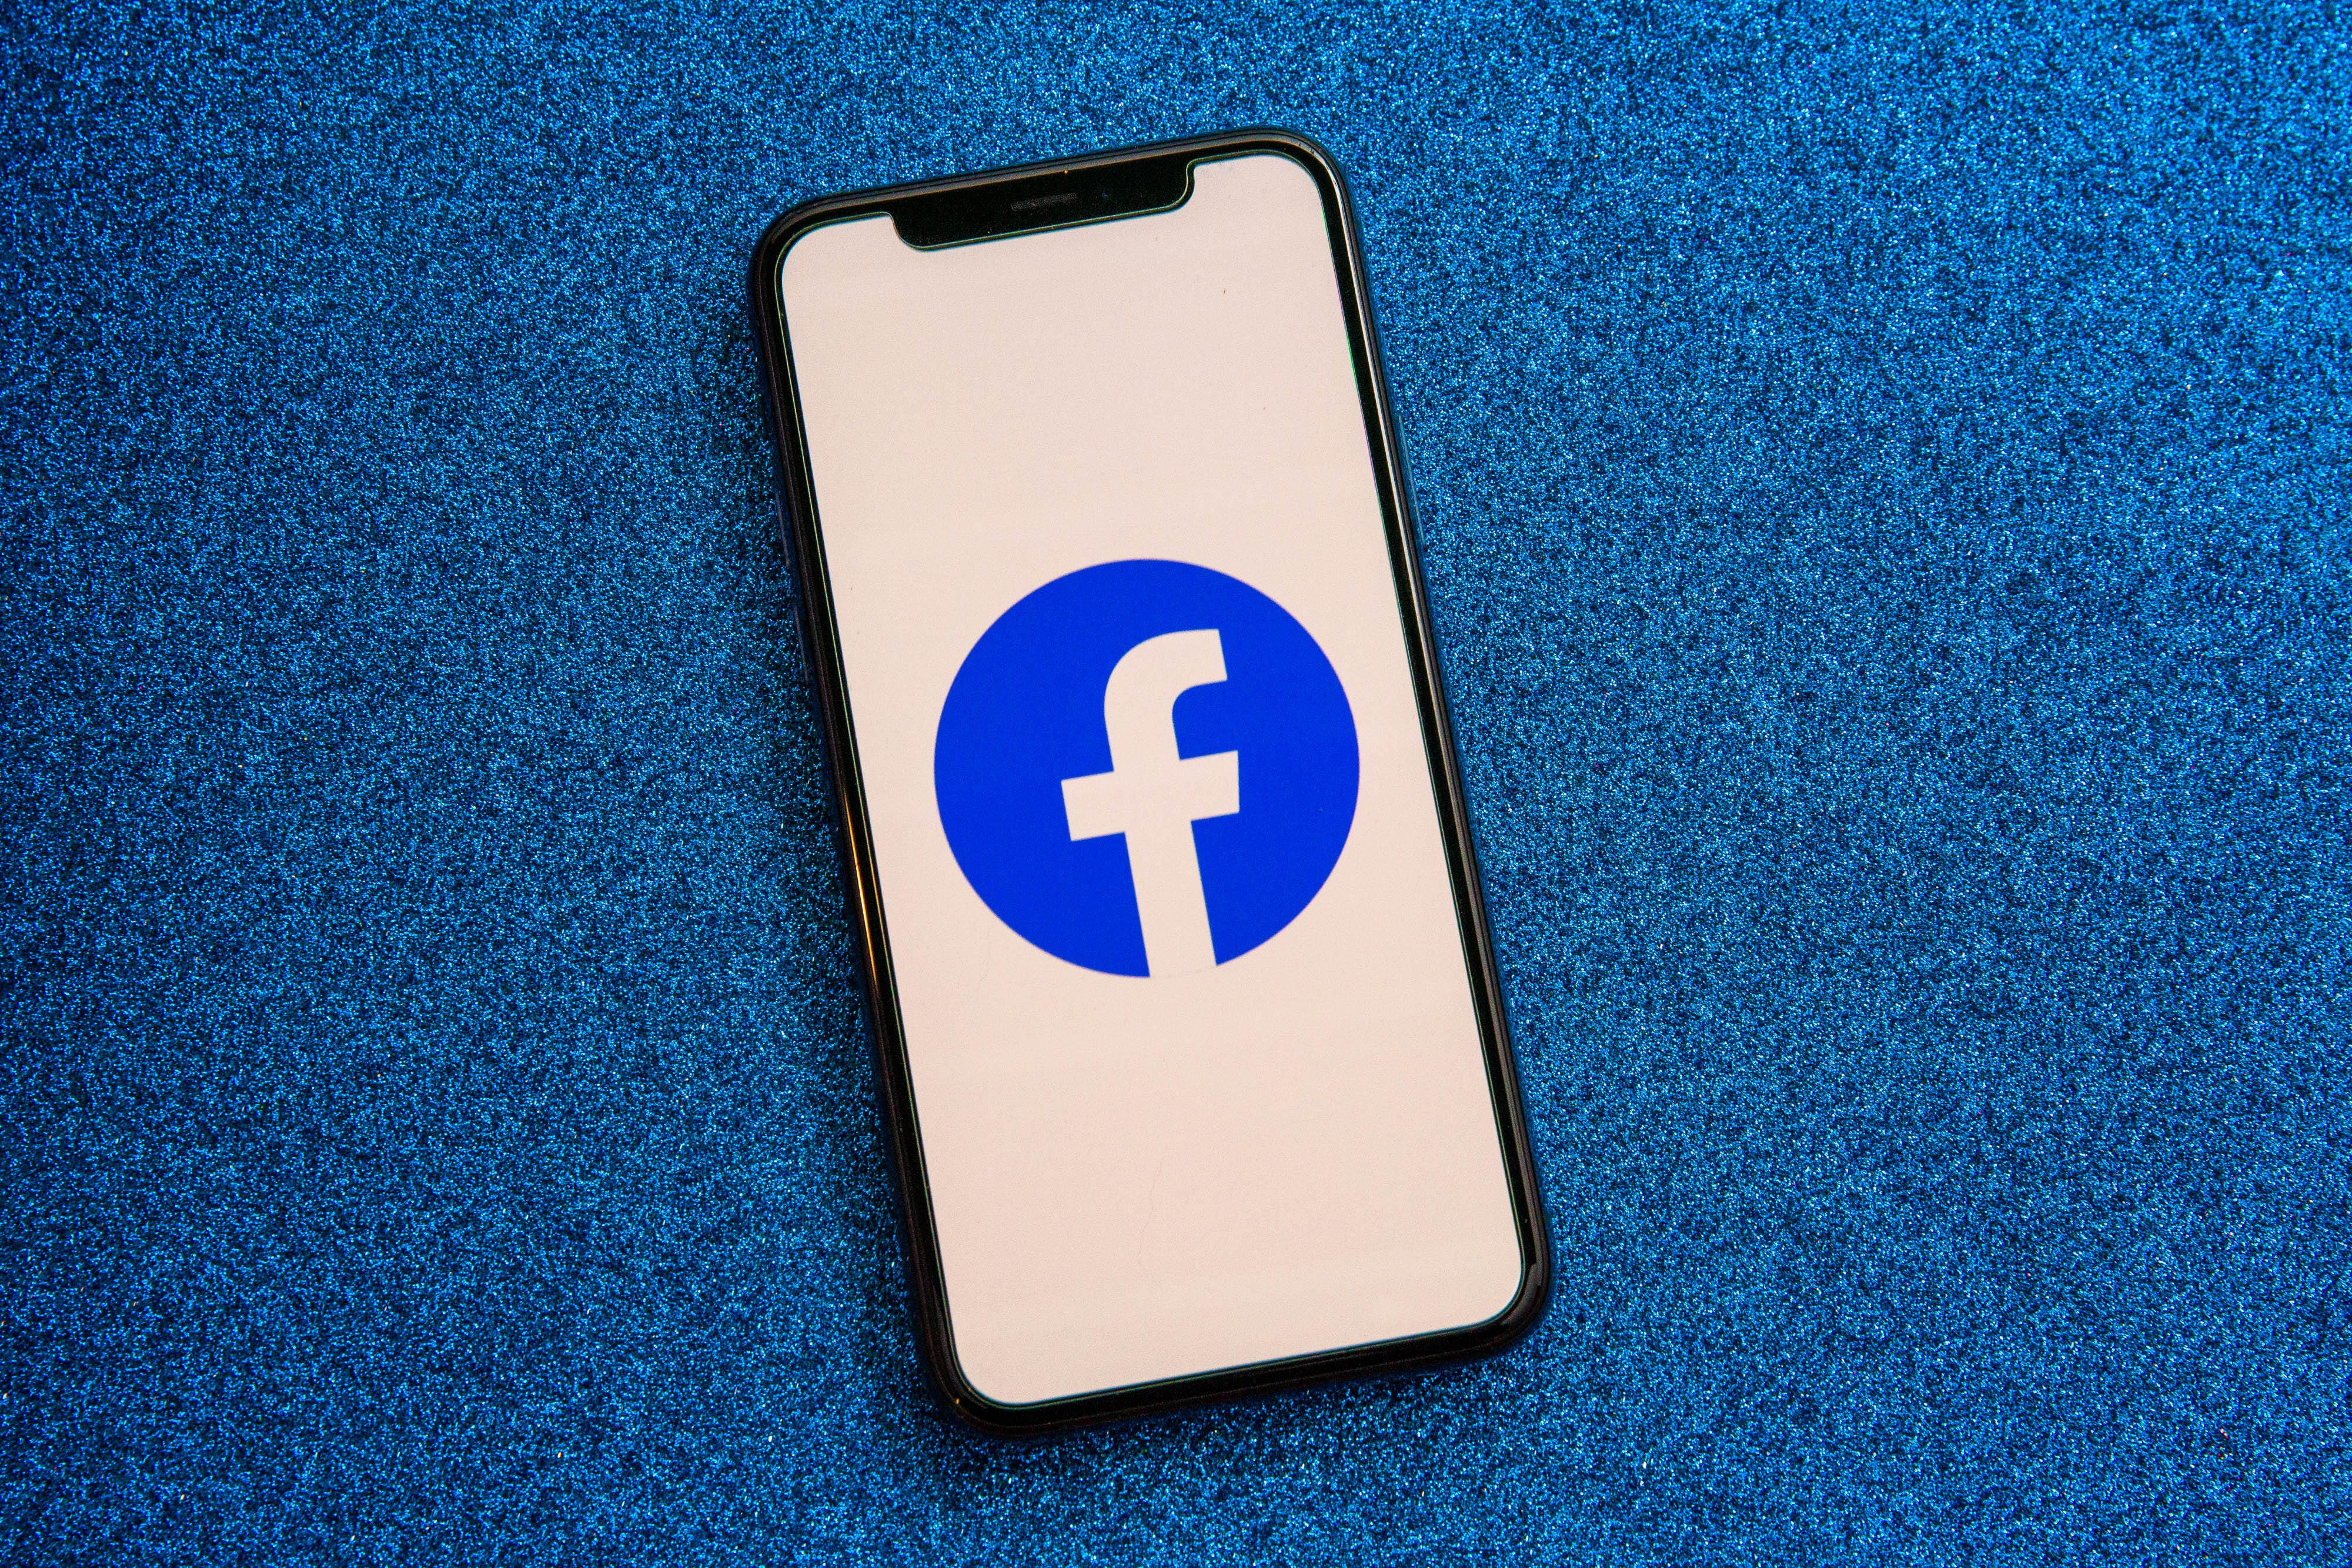 001-facebook-app-logo-on-phone-2021